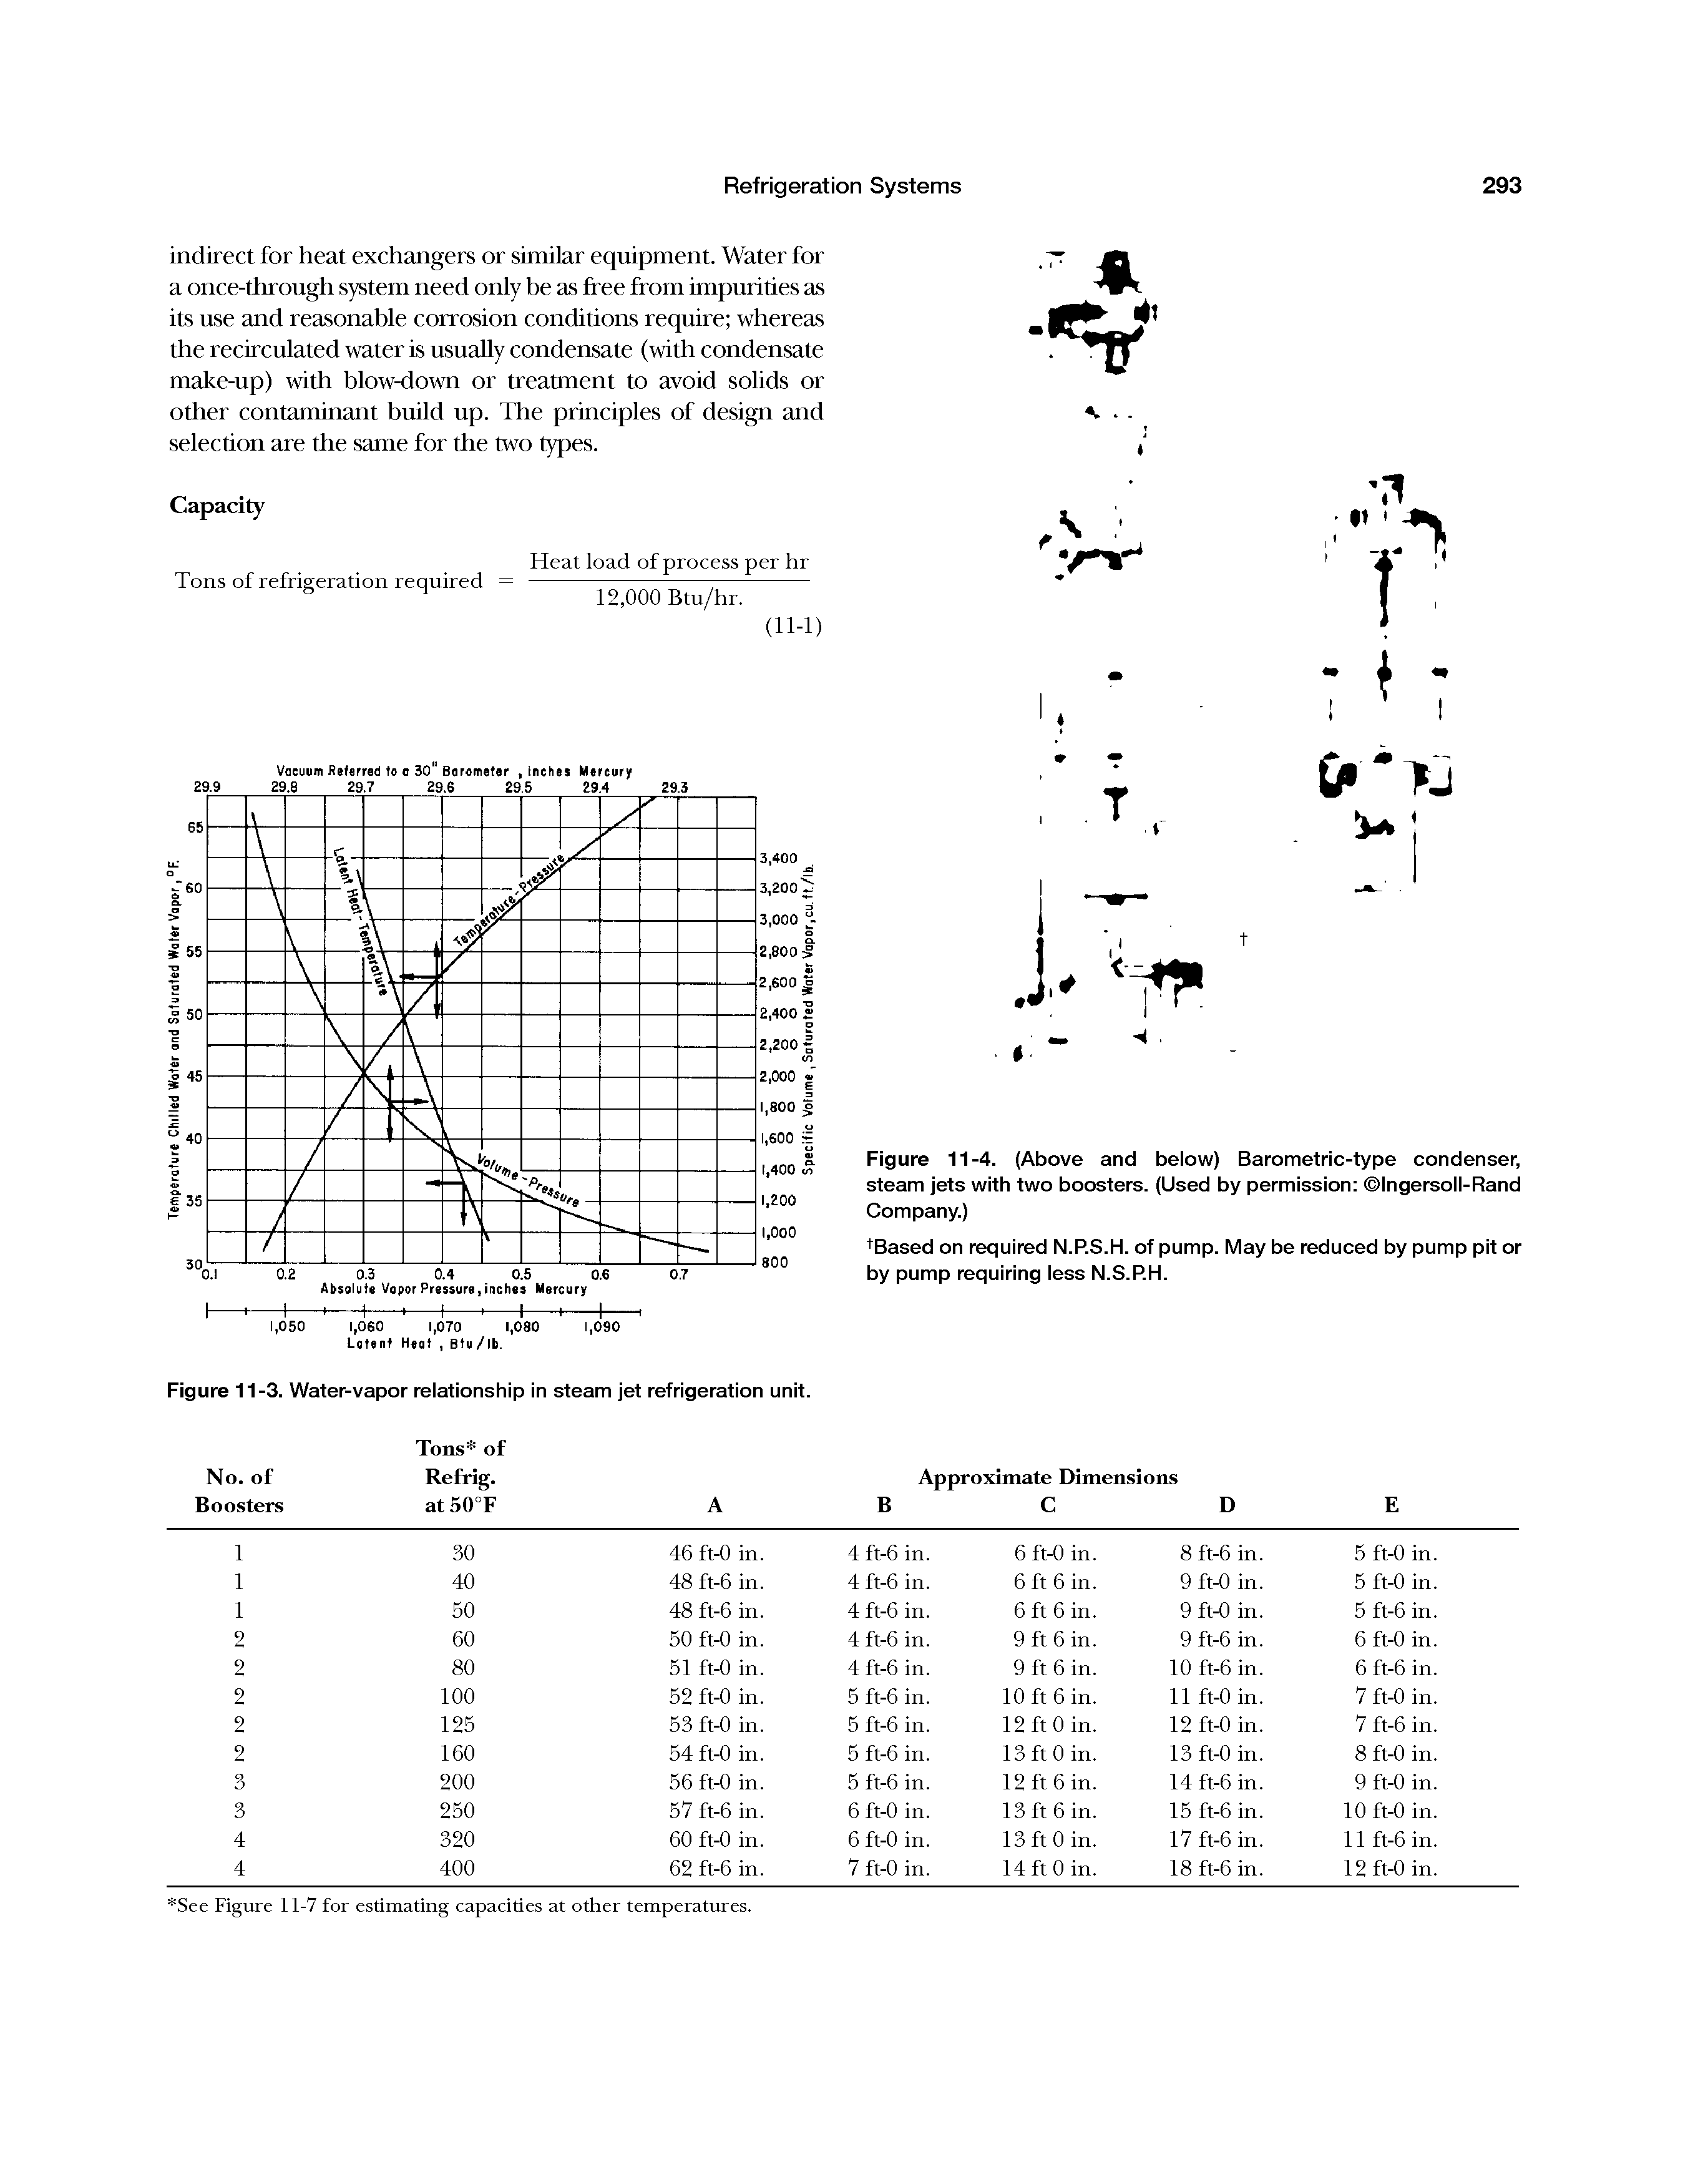 Figure 11-3. Water-vapor relationship in steam jet refrigeration unit.